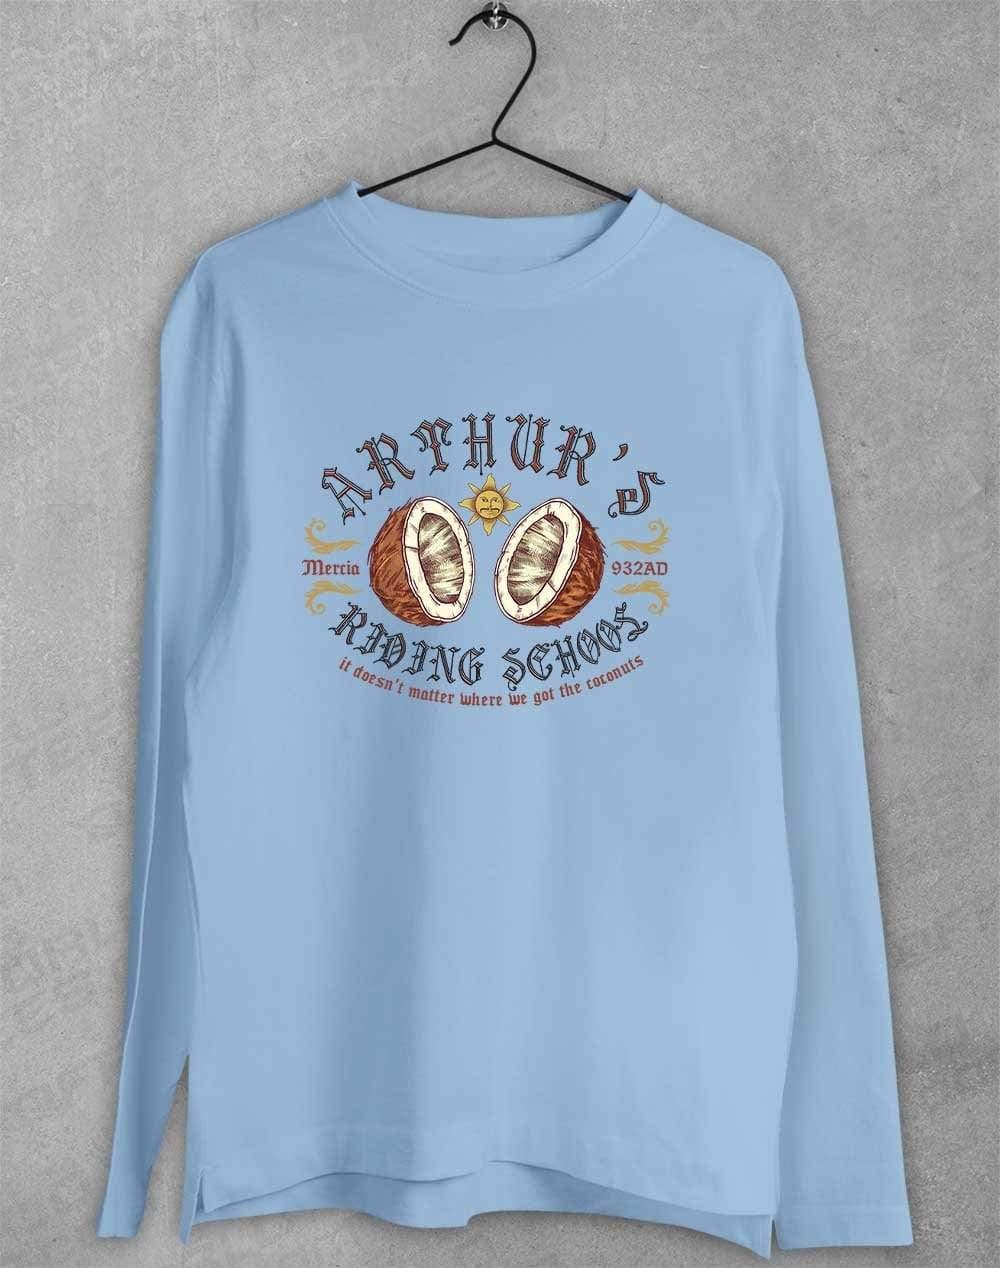 King Arthur's Riding School Long Sleeve T-Shirt S / Light Blue  - Off World Tees